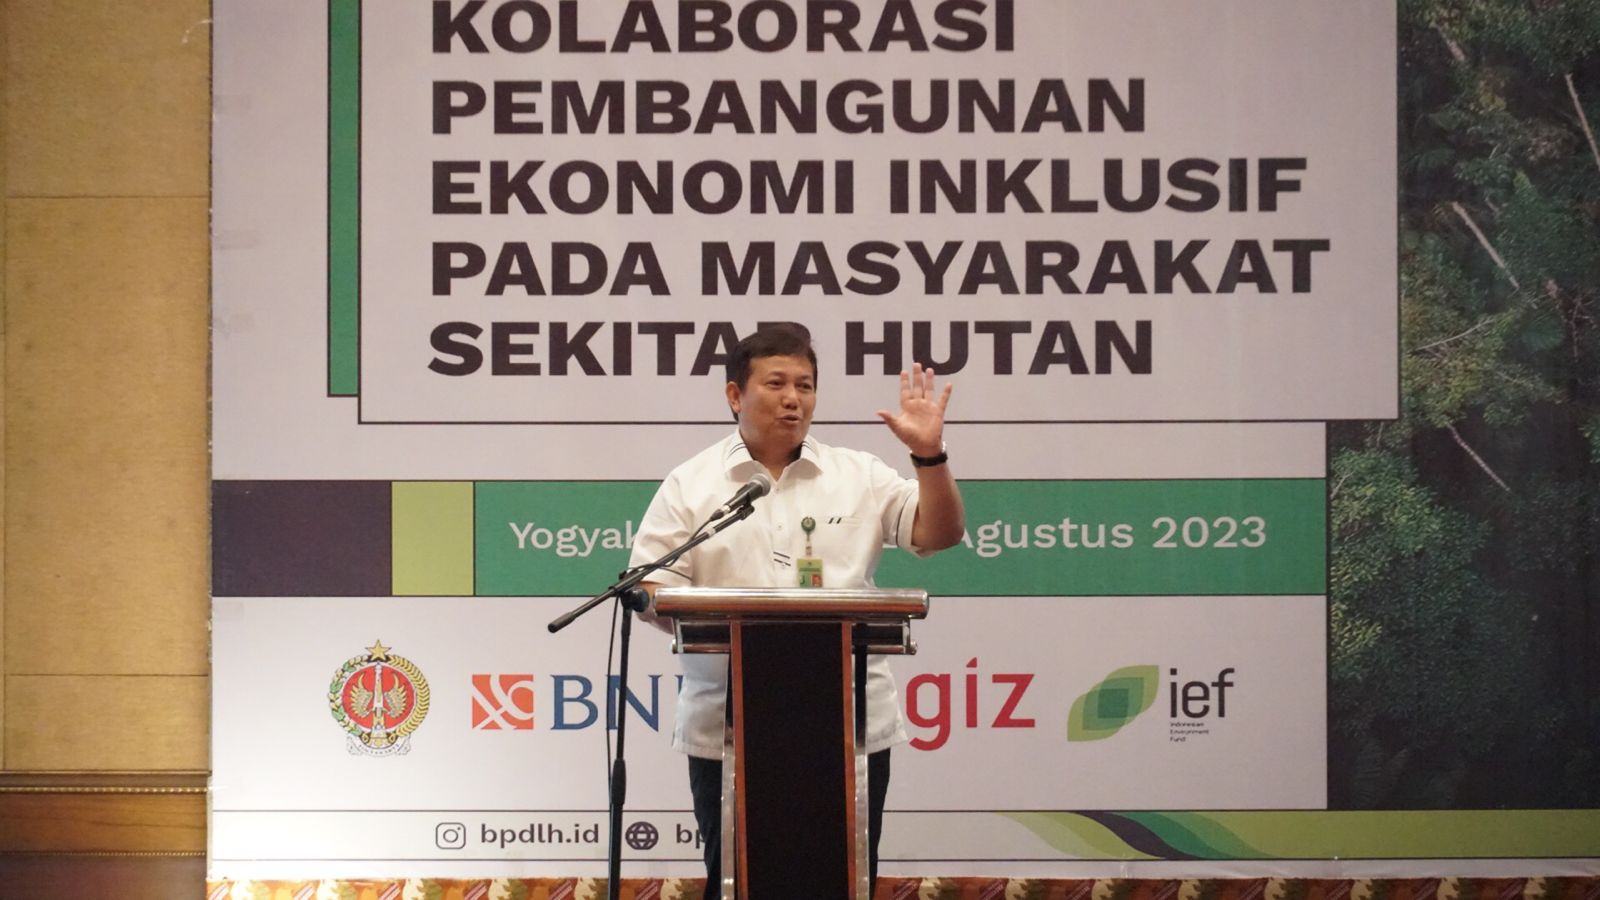 Kolaborasi Pembangunan Ekonomi Inklusif pada masyarakat perhutanan sosial di Provinsi DI. Yogyakarta